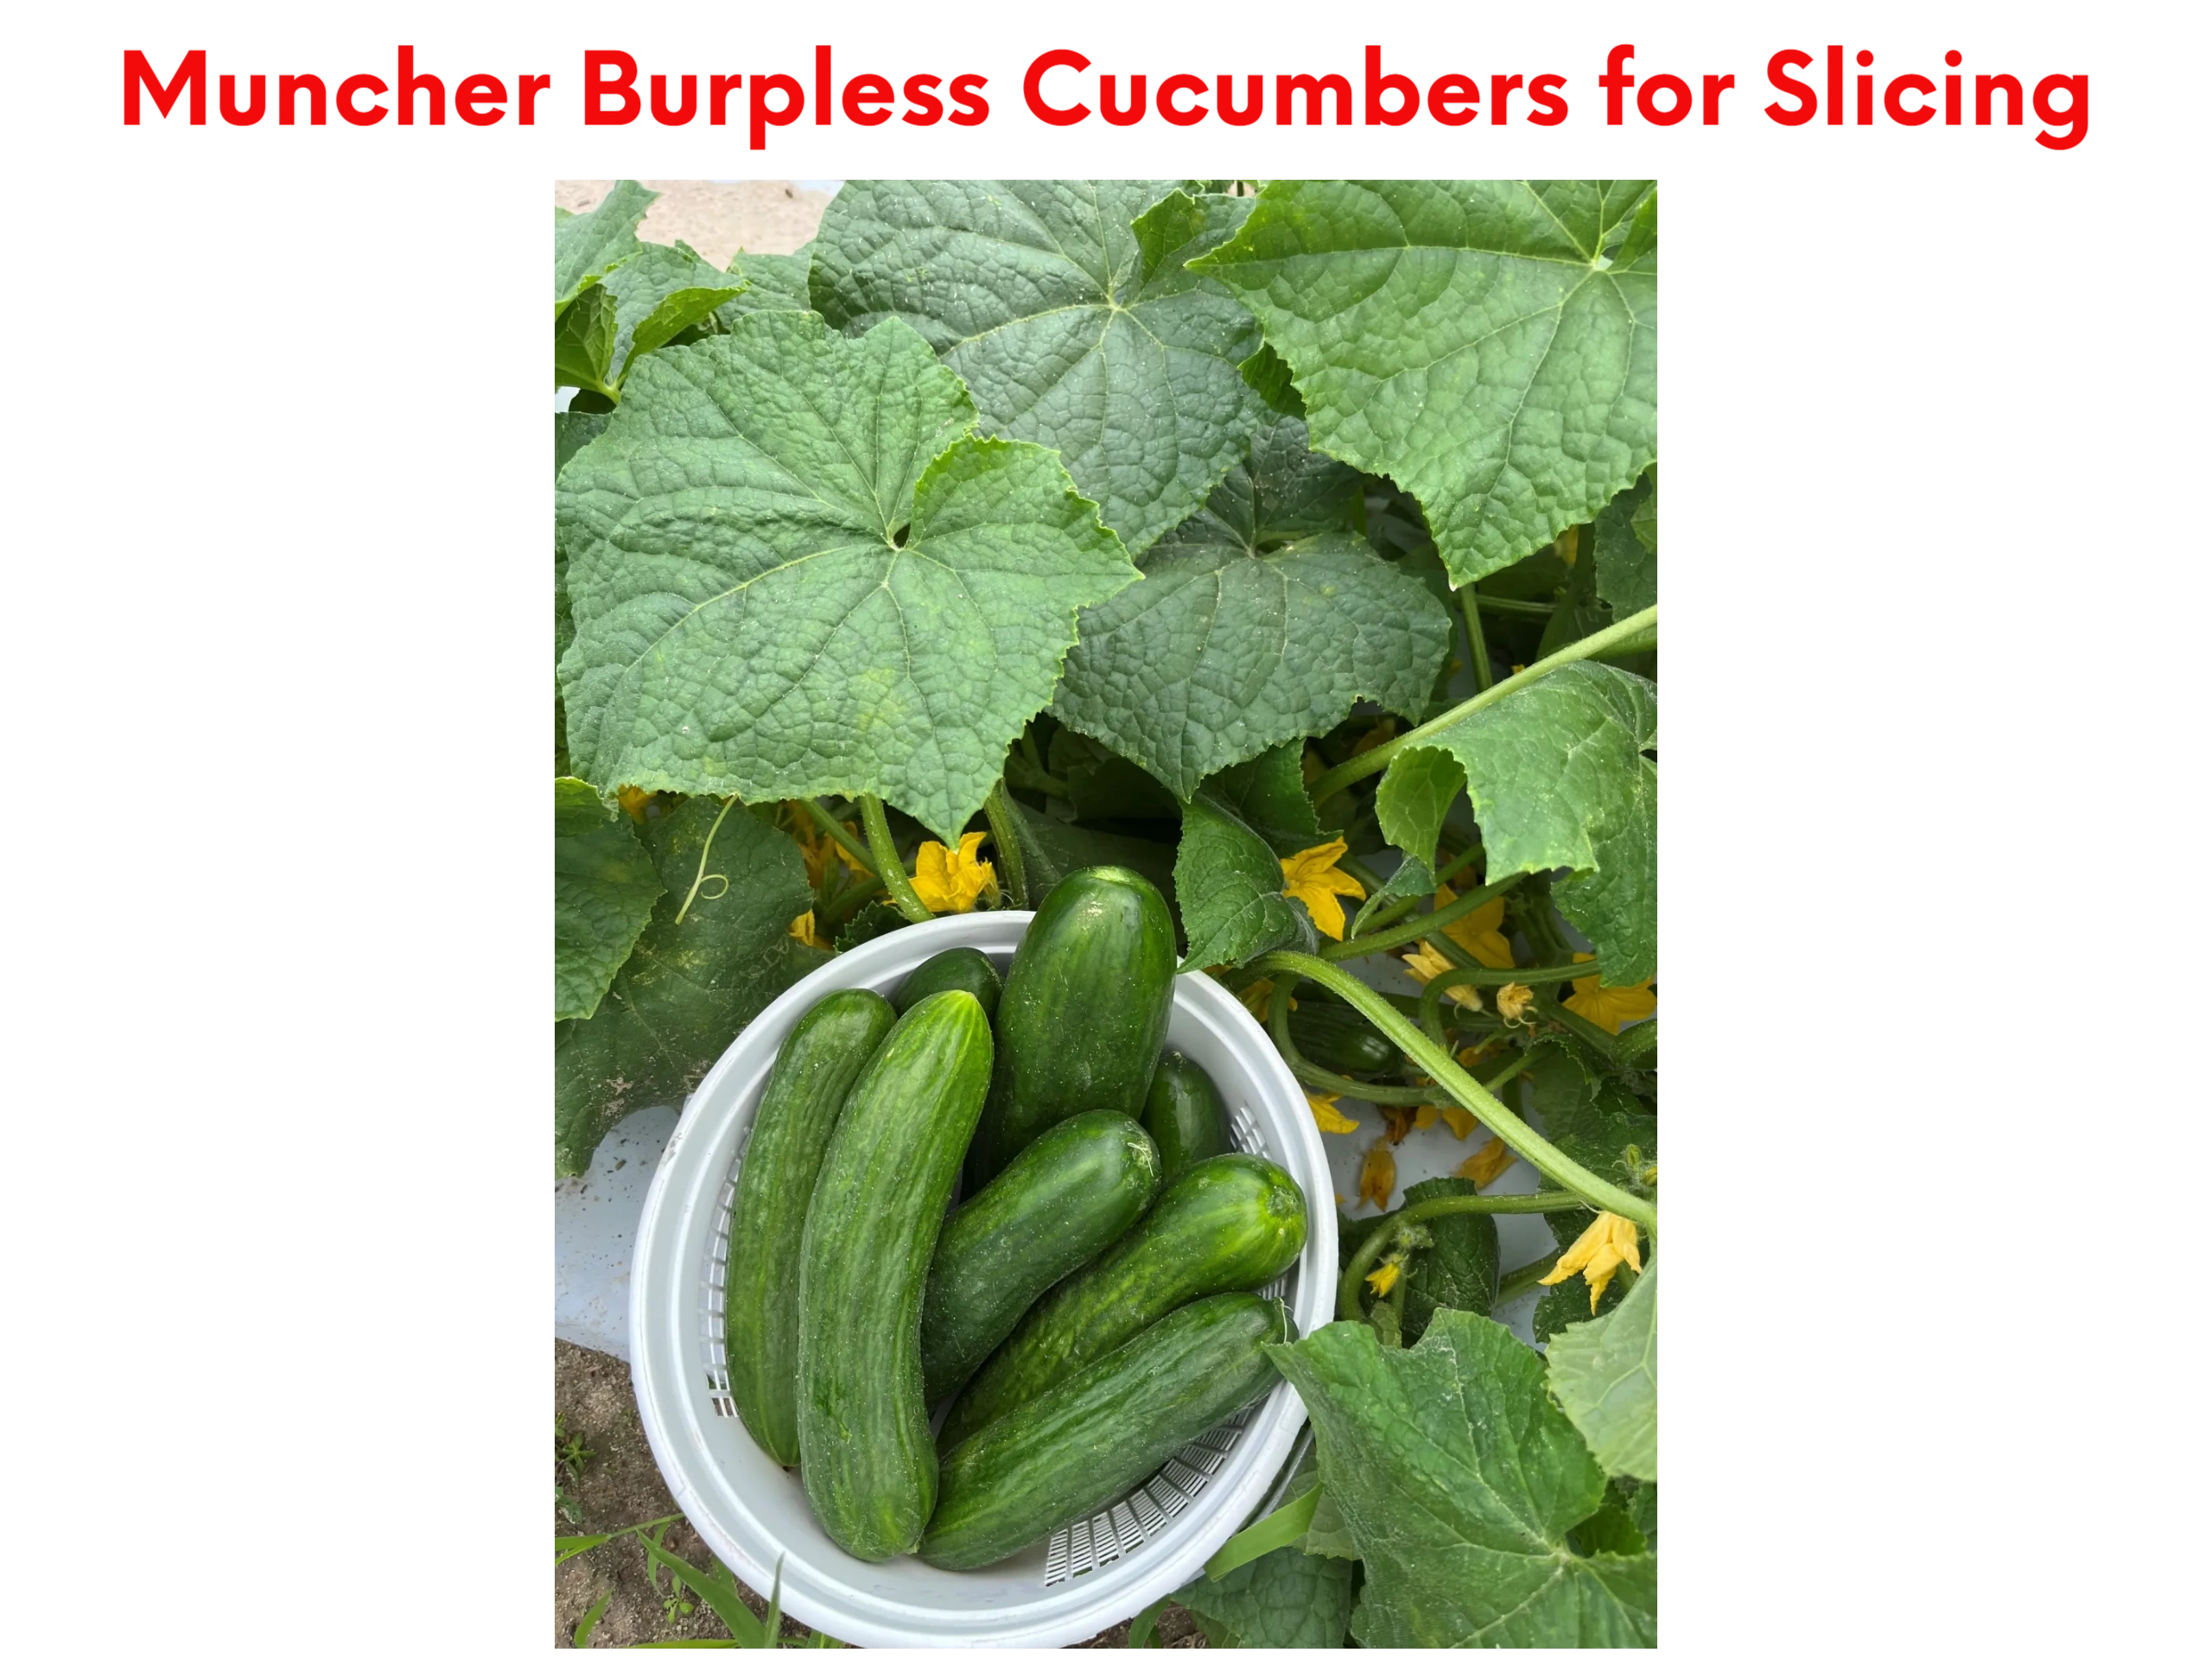 Muncher Burpless Cucumbers for Slicing